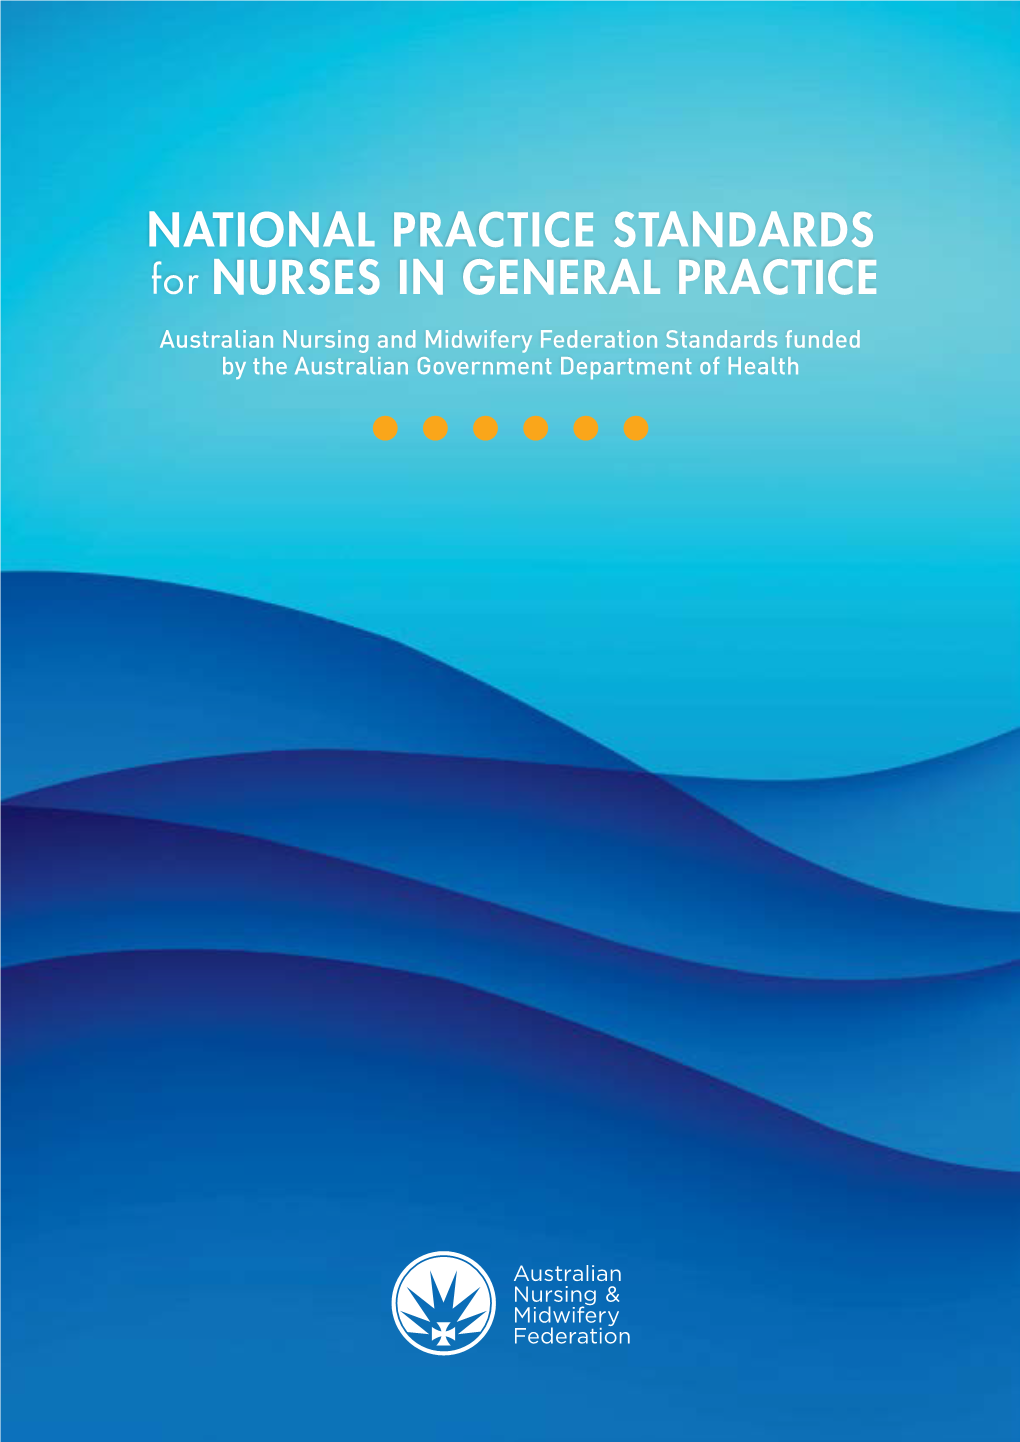 ANMF National Practice Standards for Nurses in General Practice